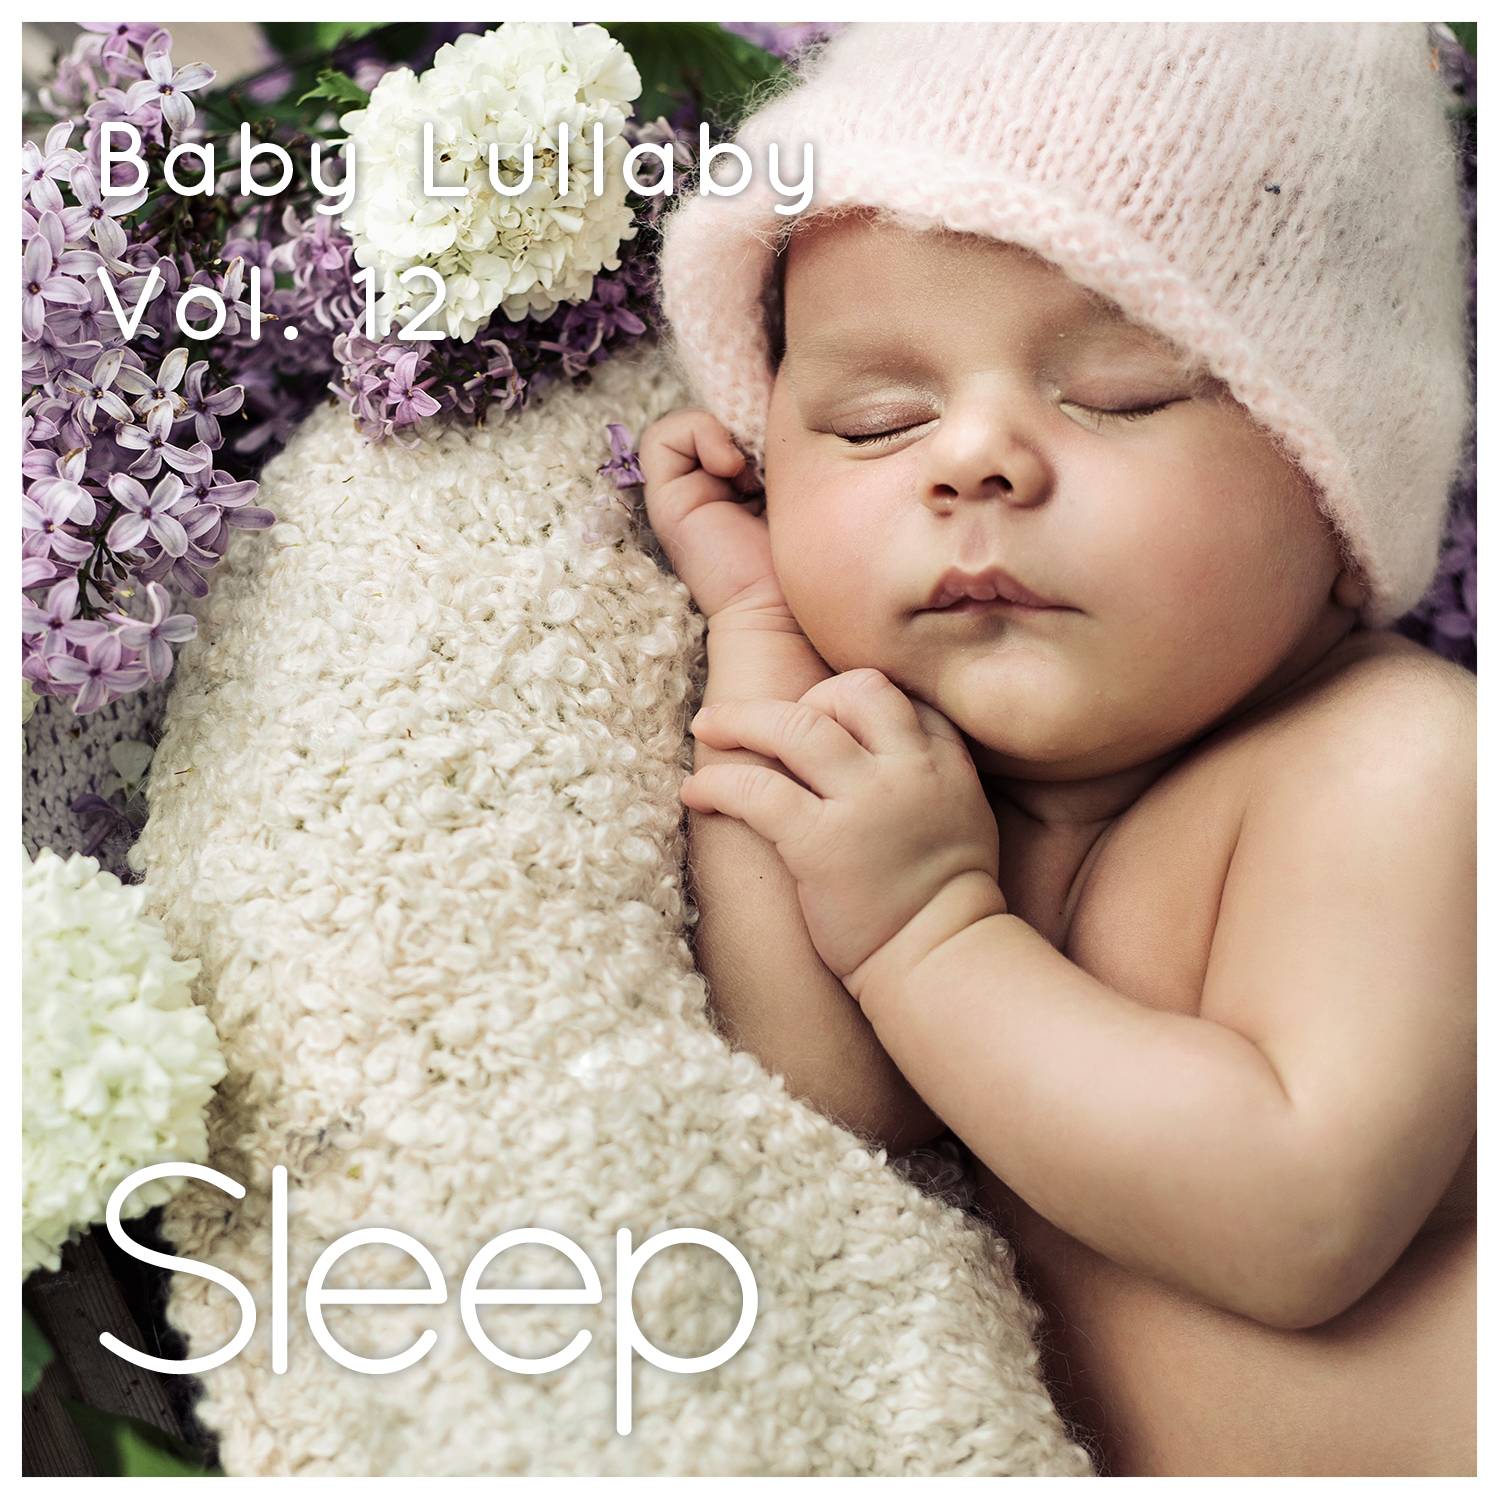 Baby Sleep - The Tumble Dryer Lullaby, Vol. 12